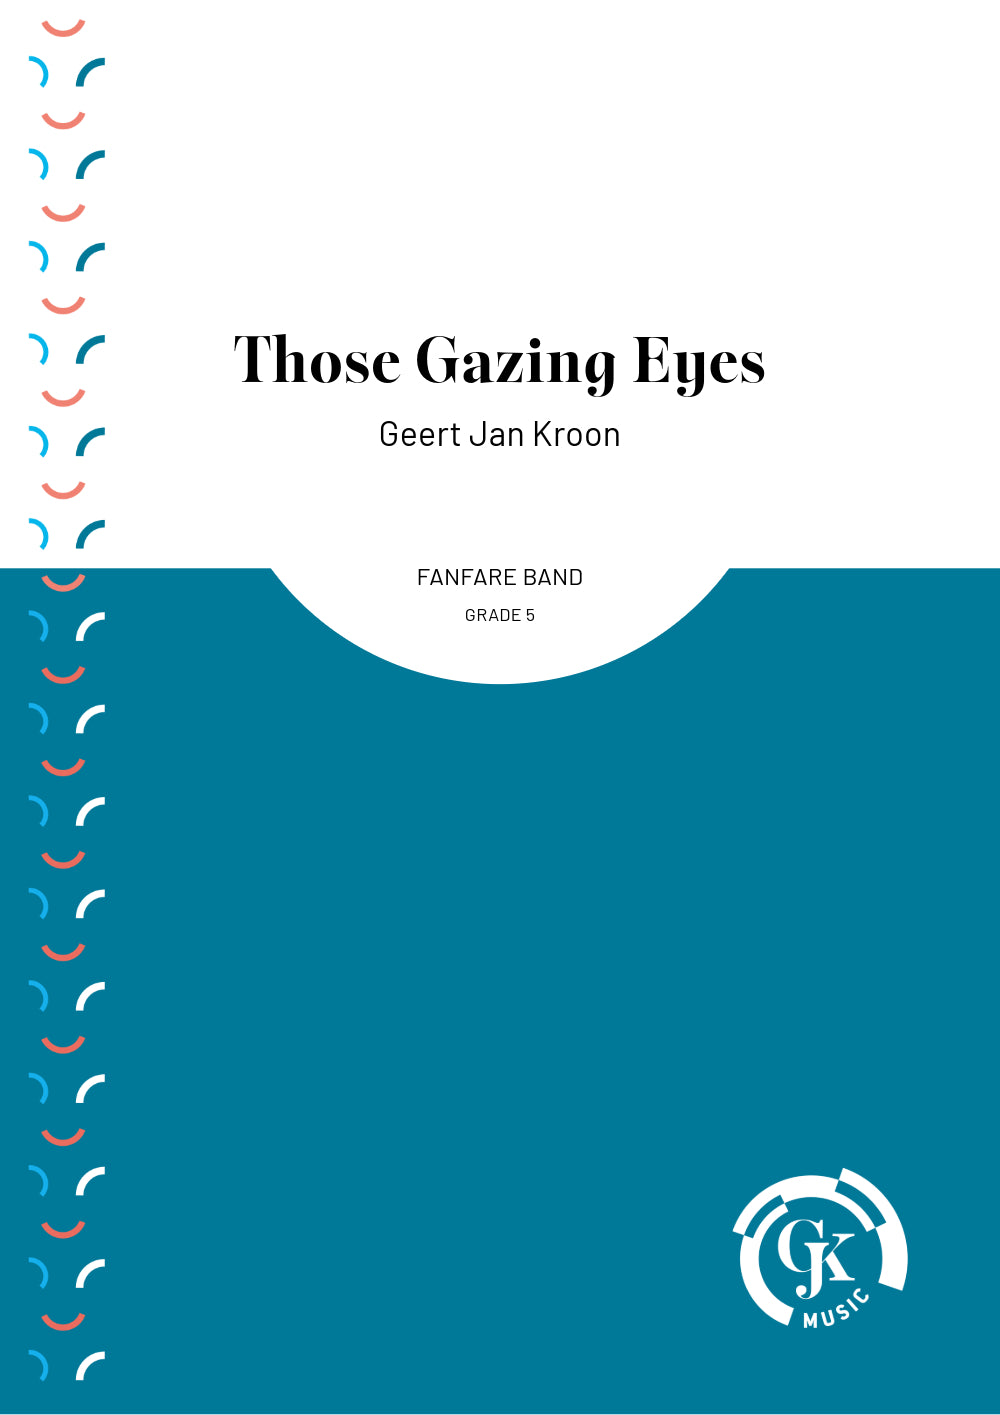 Those Gazing Eyes - Fanfare